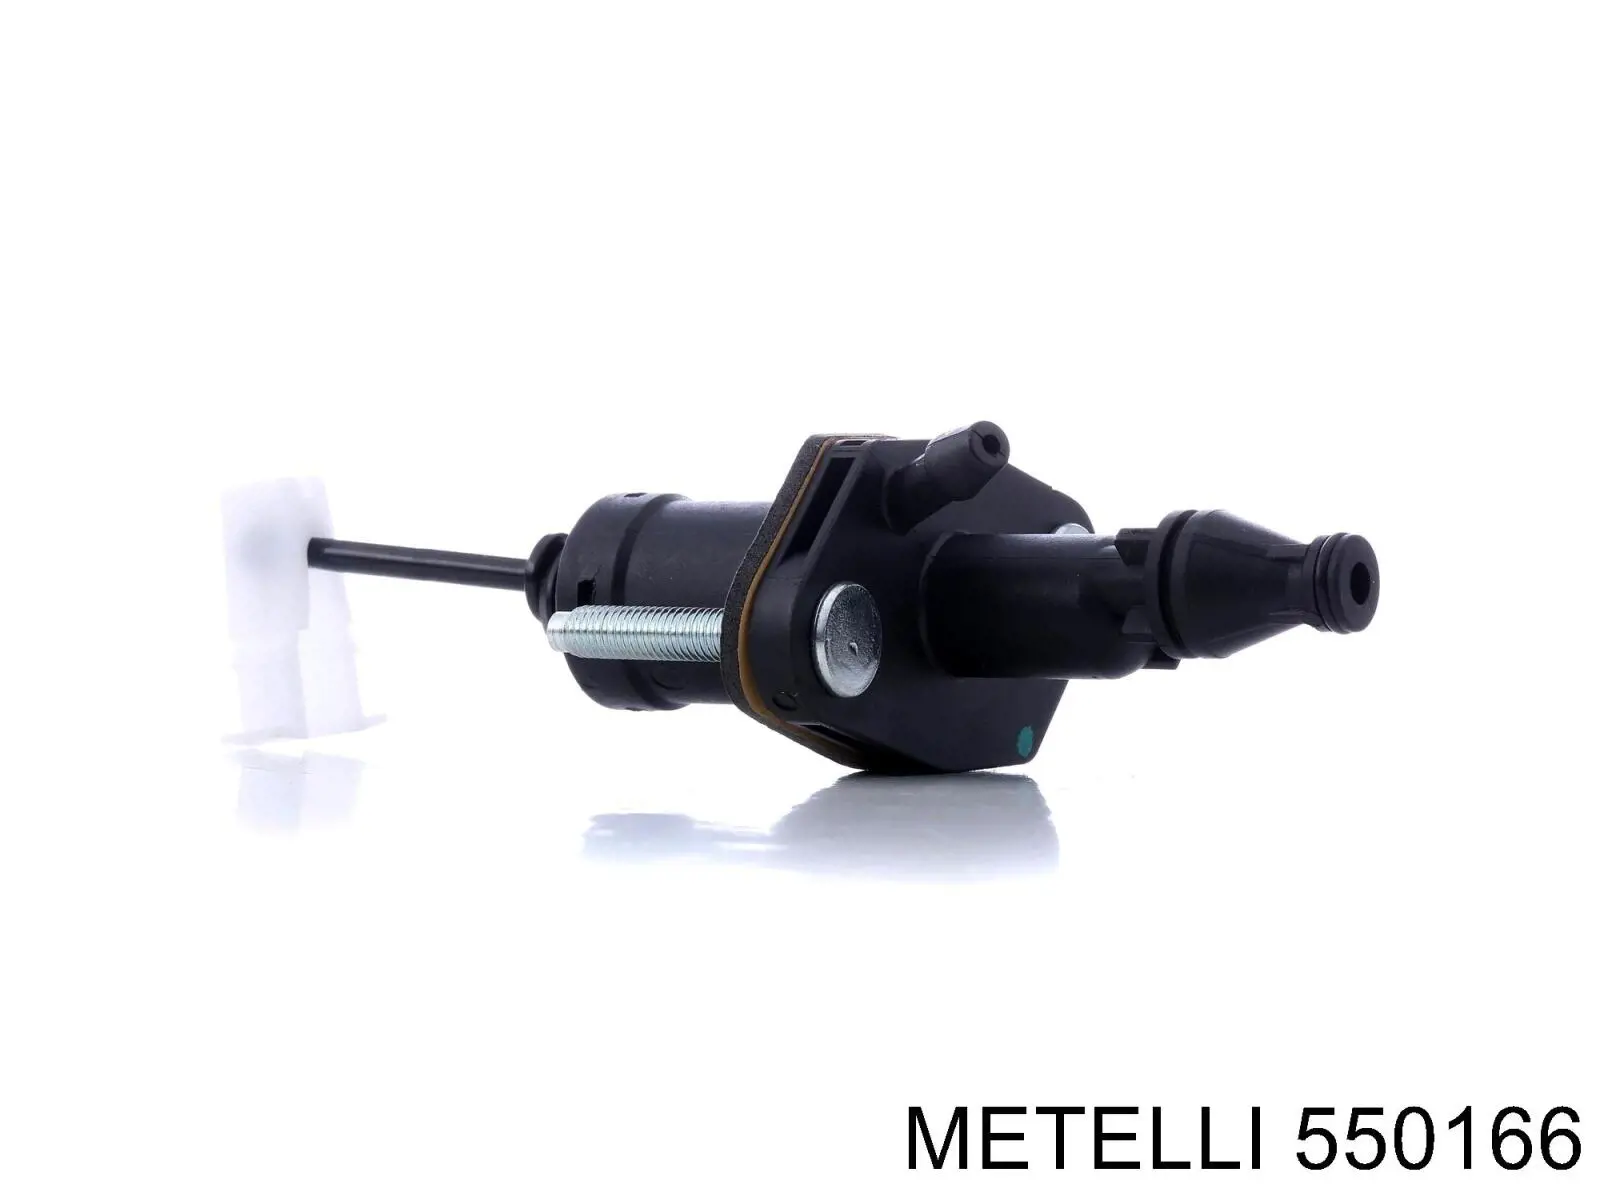 55-0166 Metelli cilindro maestro de embrague